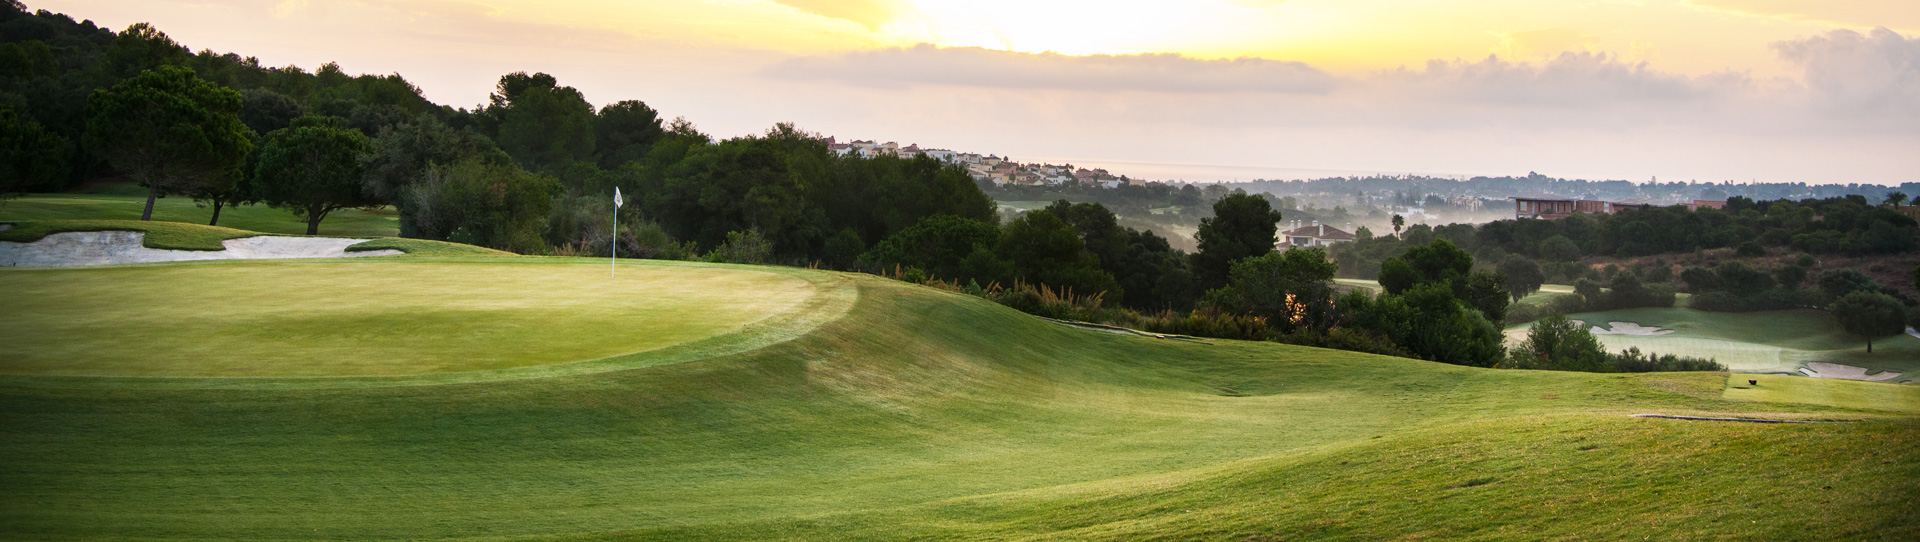 Spain golf courses - La Reserva at Sotogrande - Photo 2